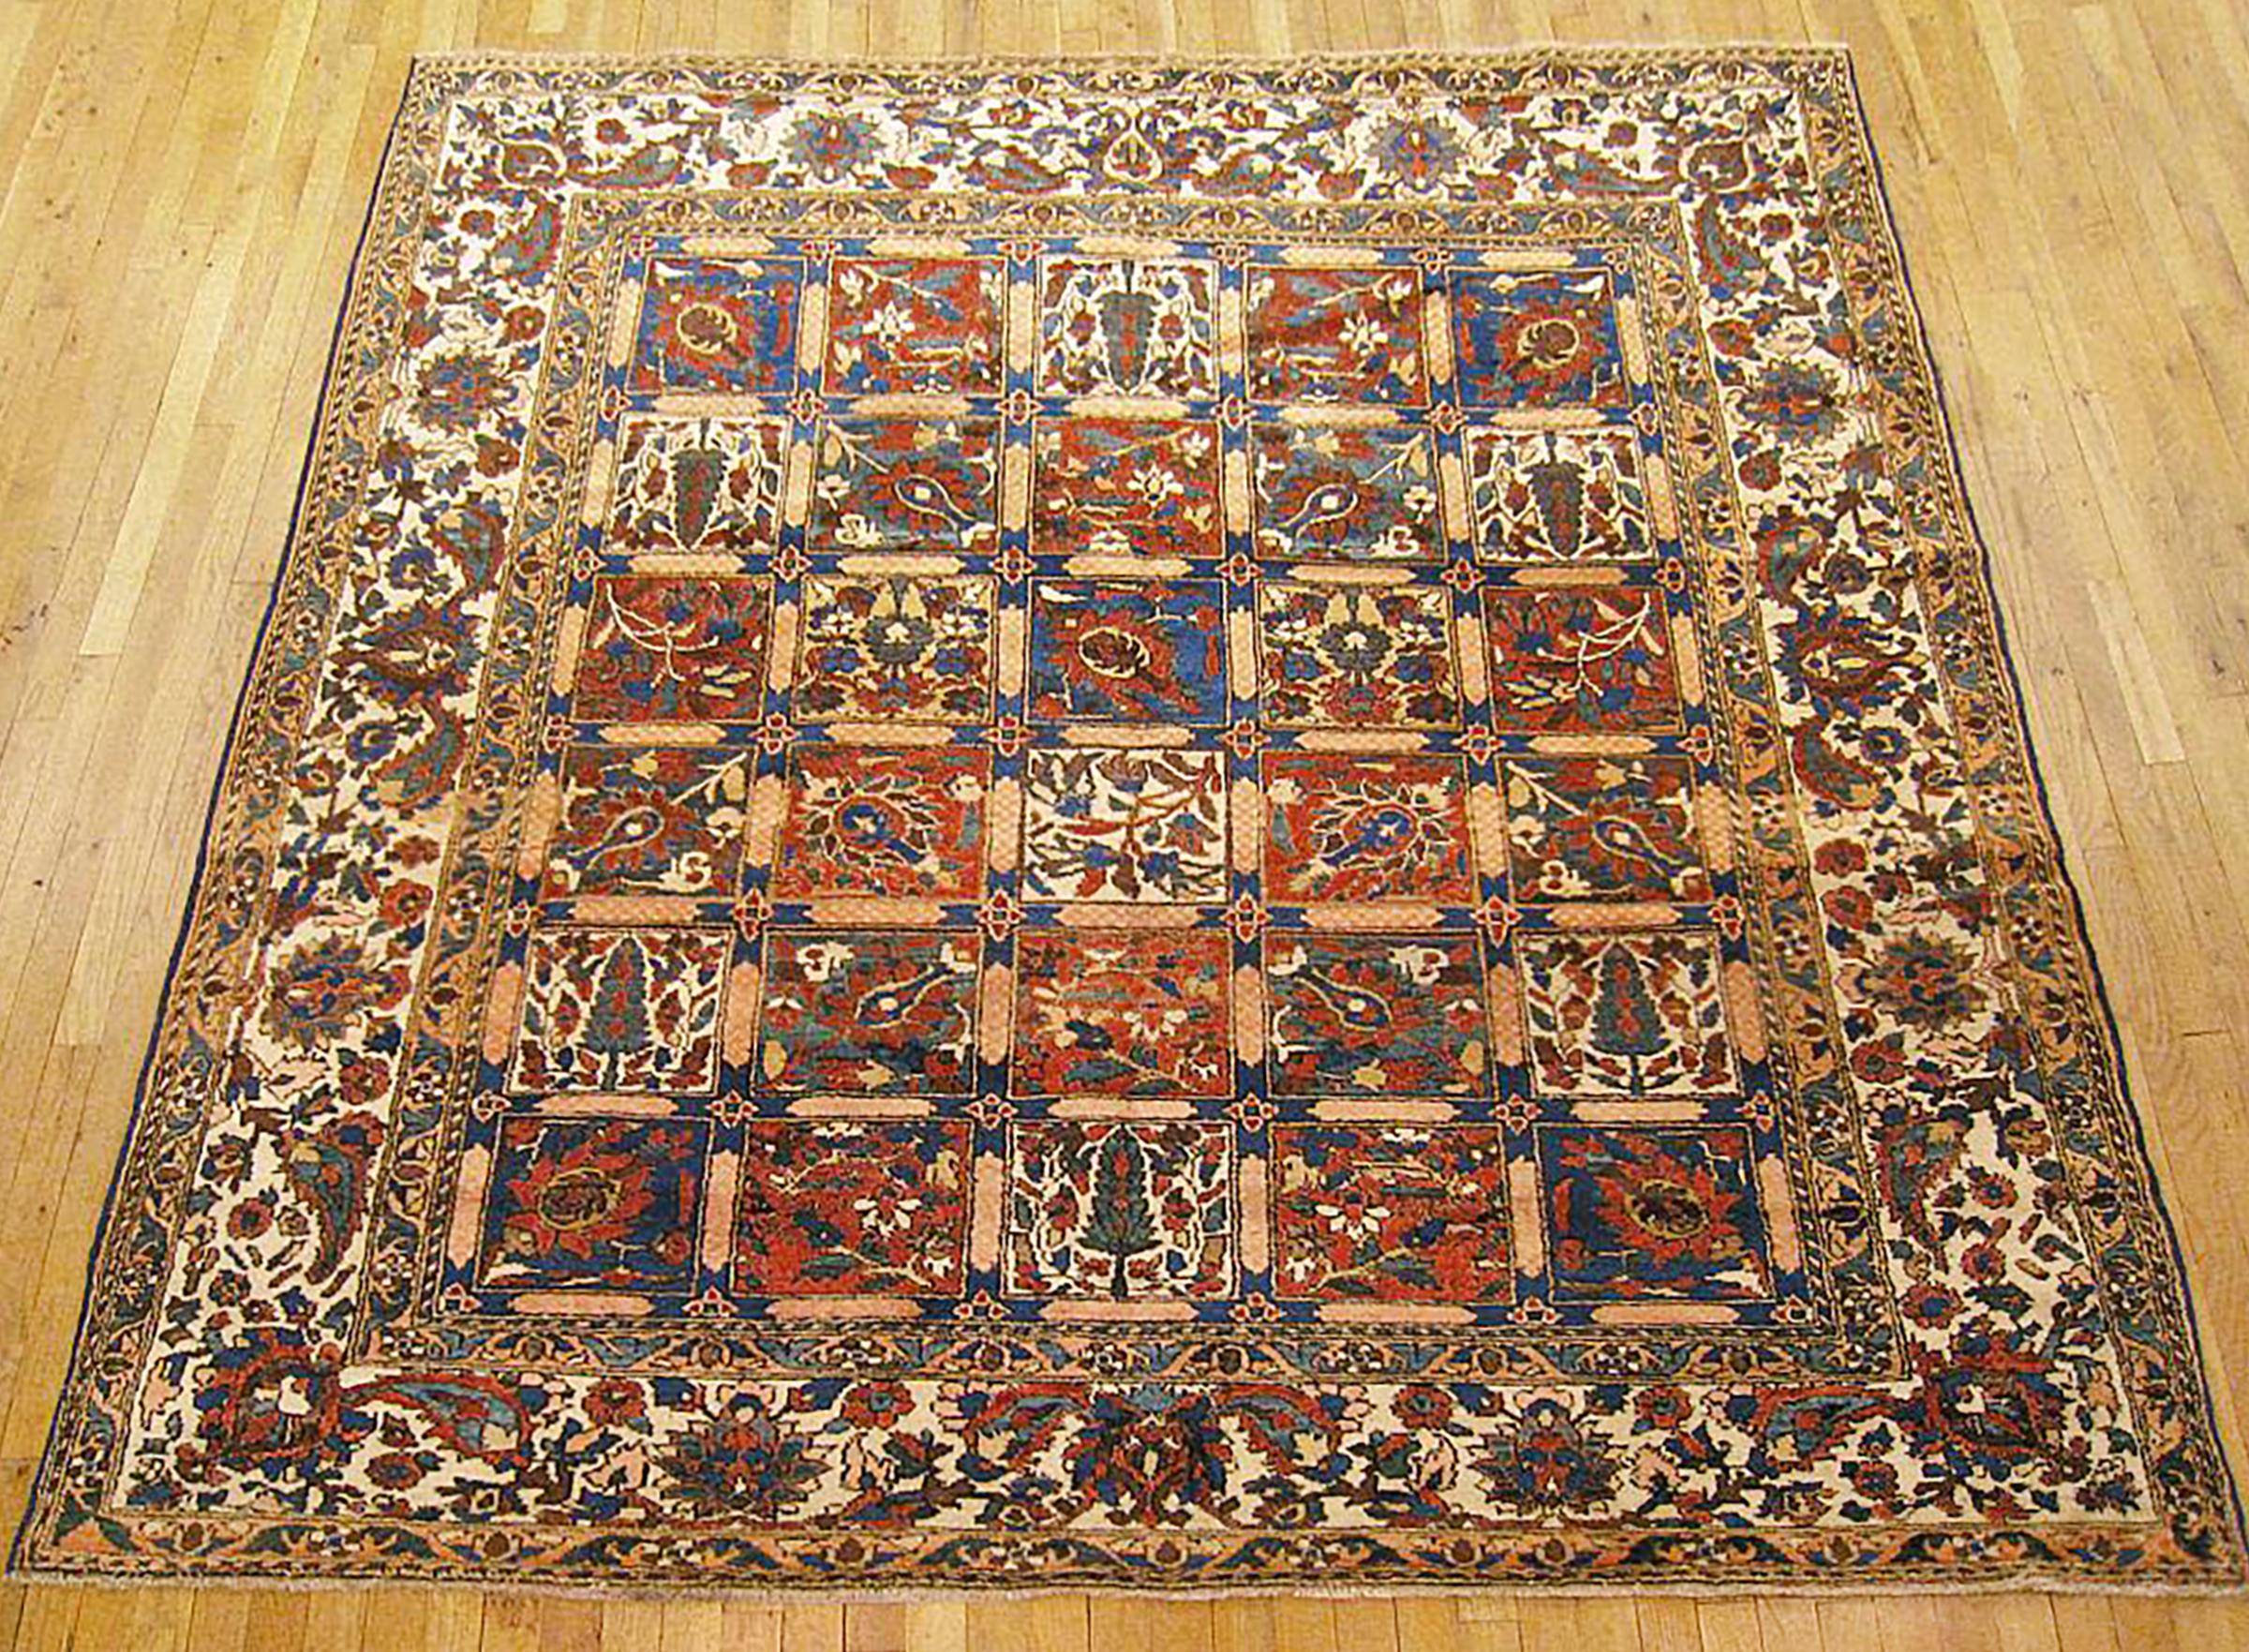 Vintage Persian Baktiari Oriental rug, Room size

A vintage Baktiari oriental rug, size 7'7